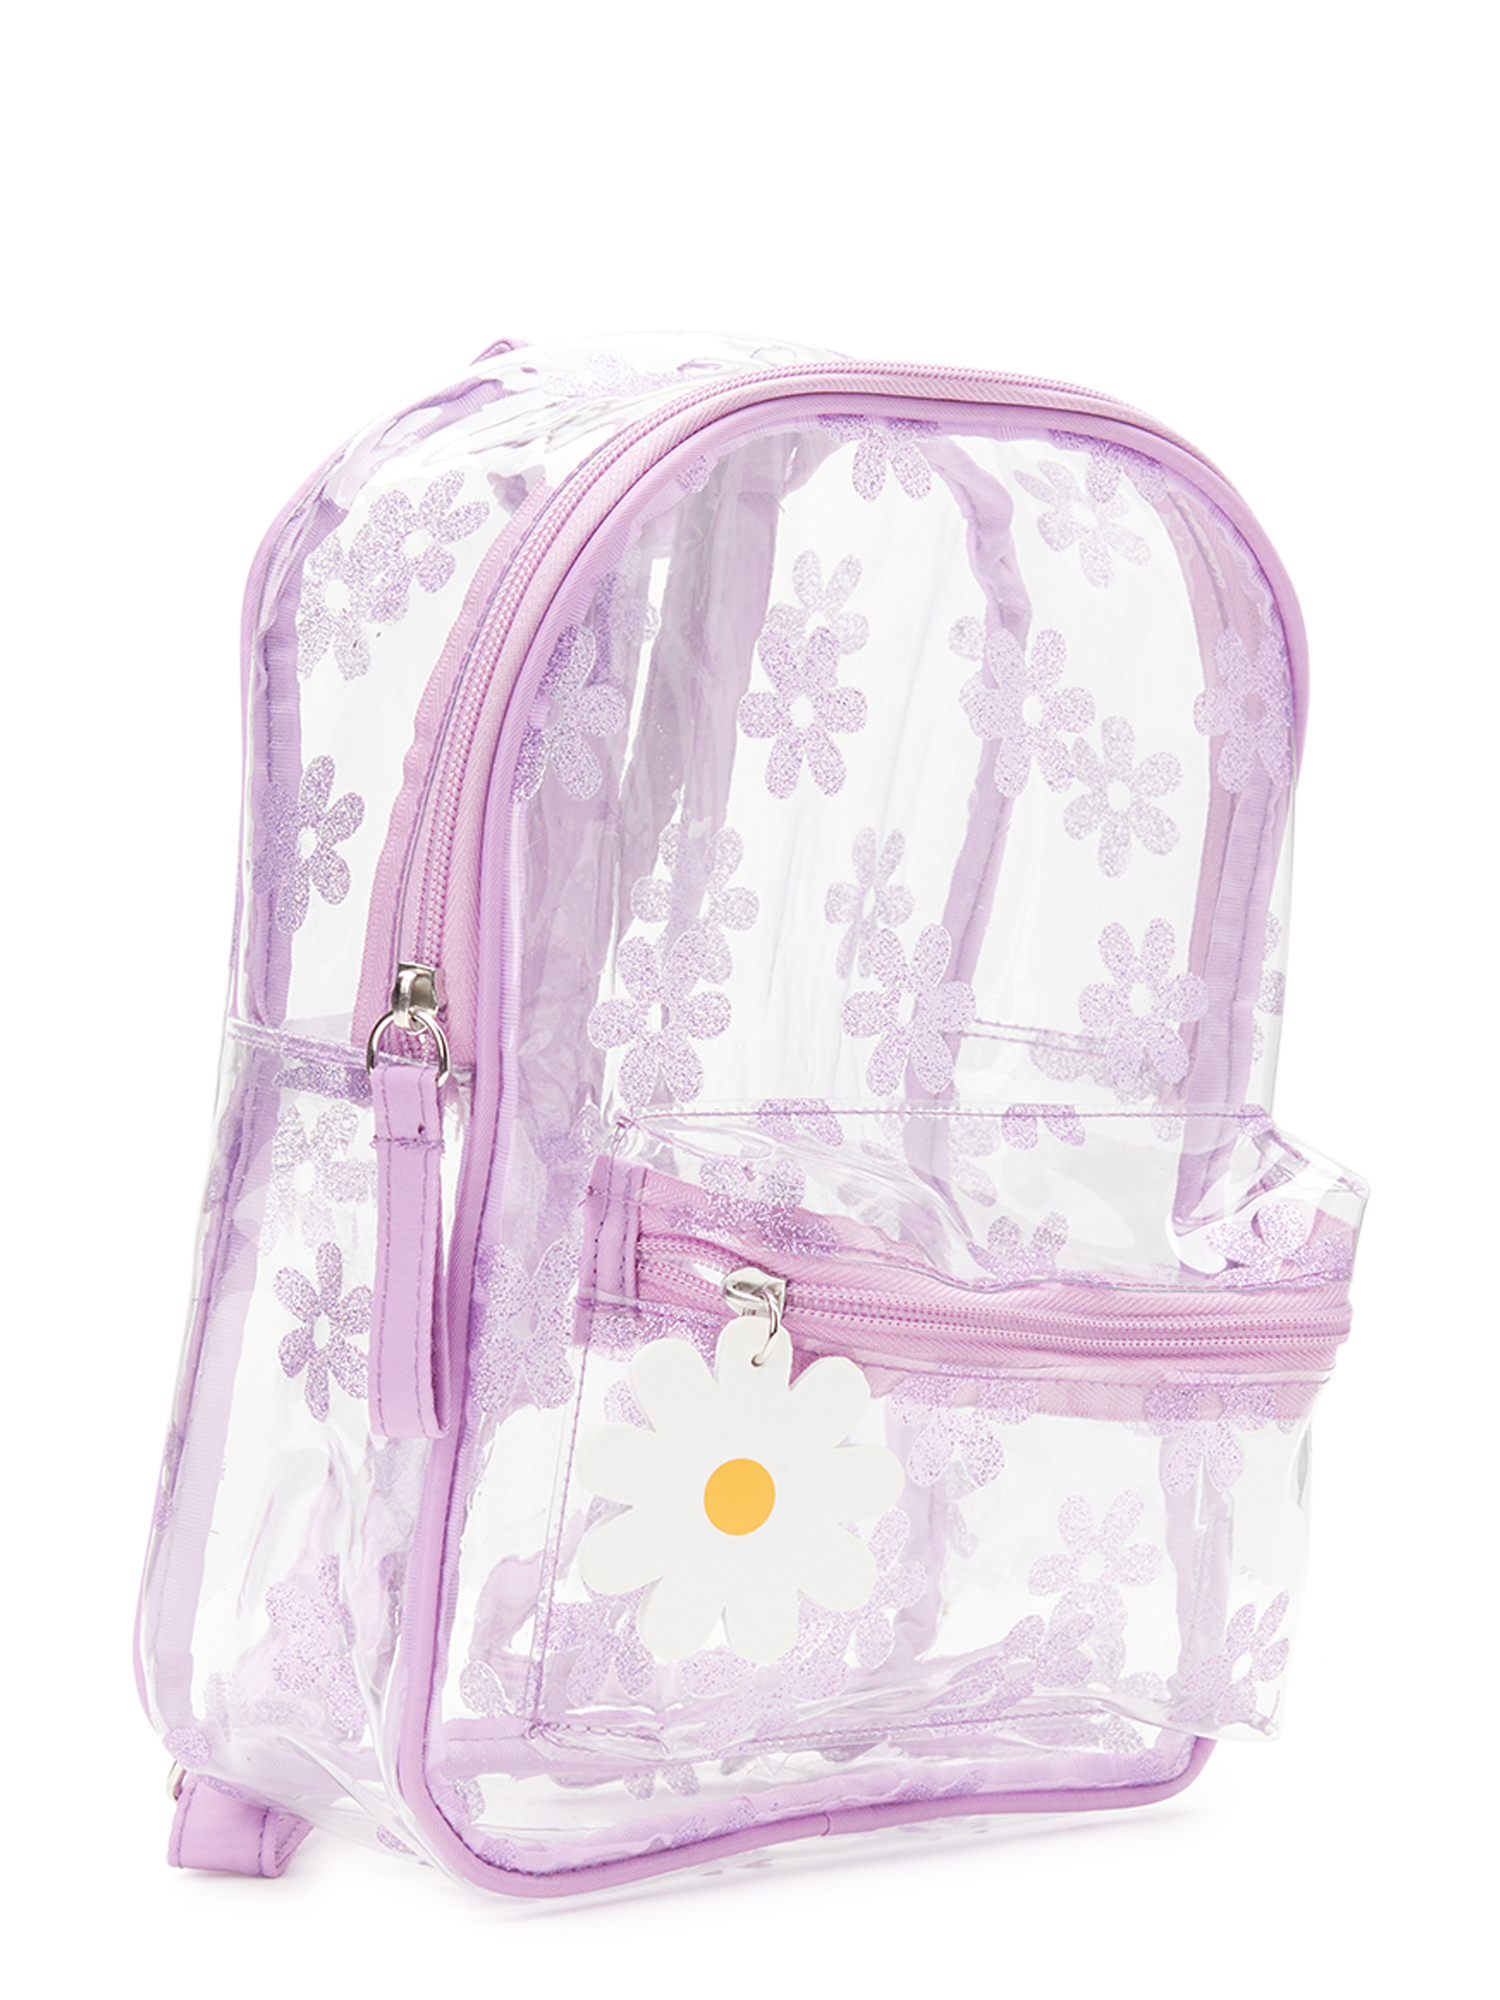 Wonder Nation Children's Daisy Glitter Print Clear Mini Dome Backpack, Purple - image 3 of 5